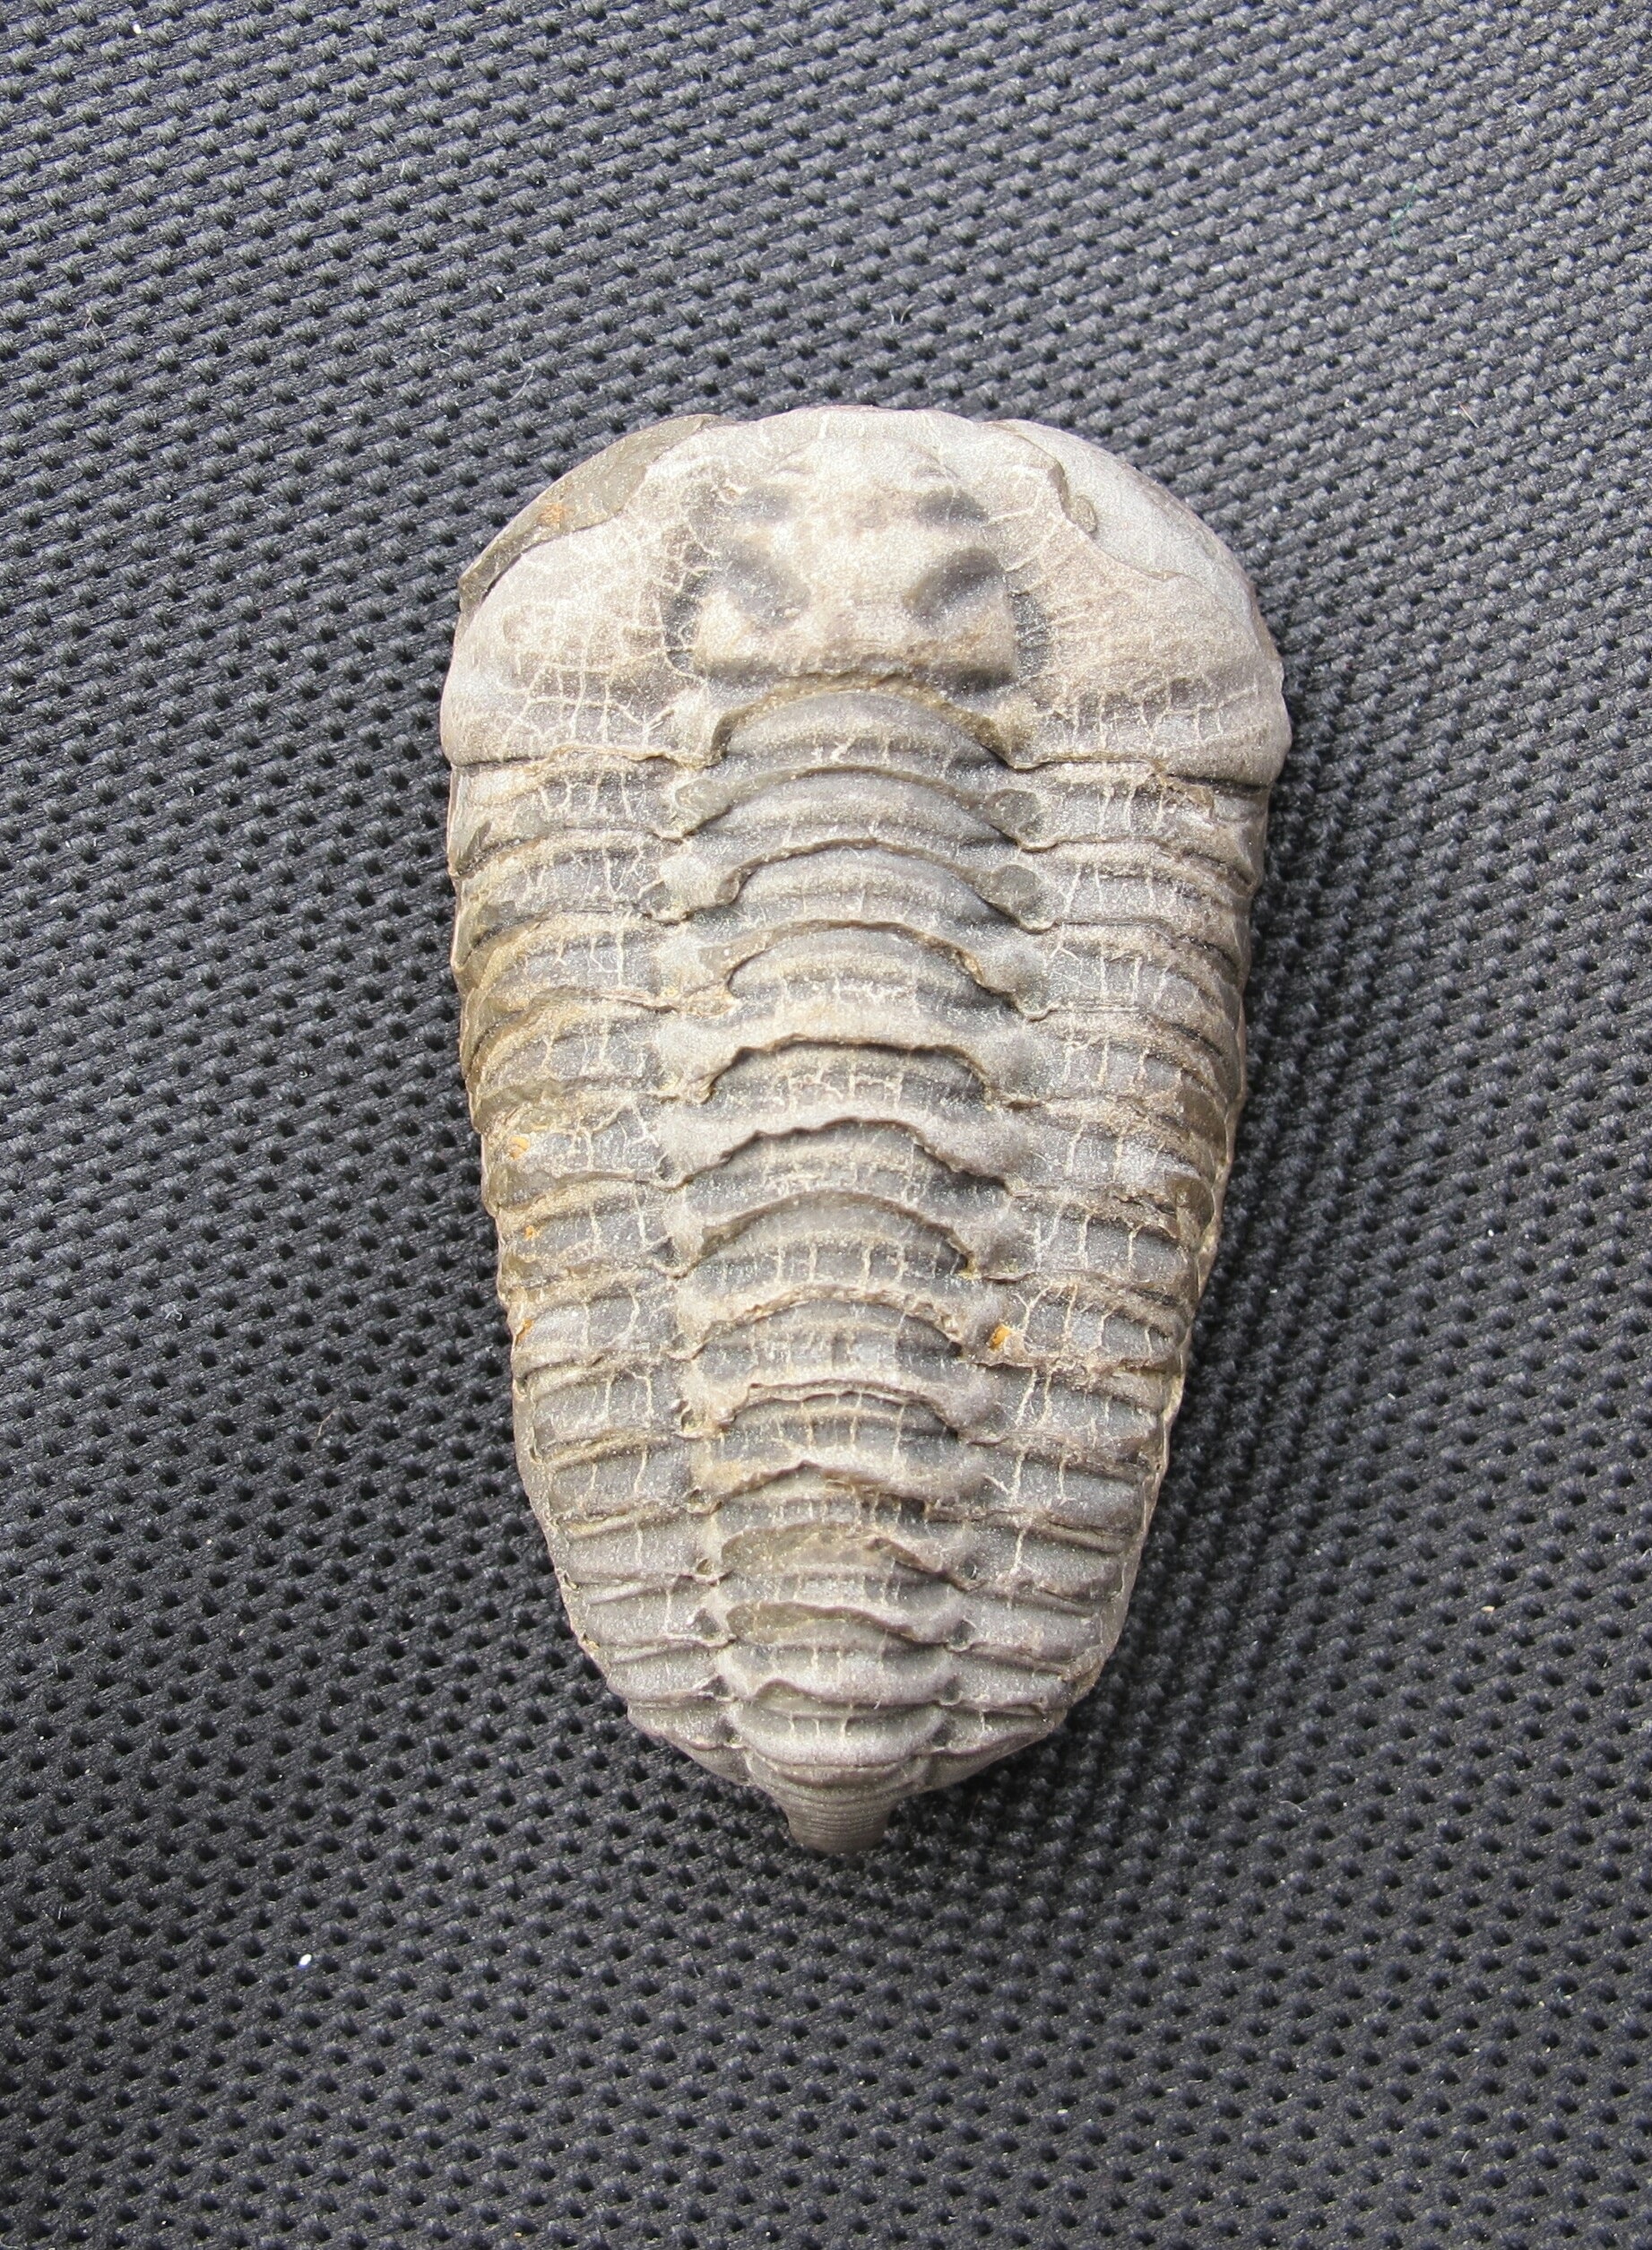 Colpocoryphe Bohemica Fossil Trilobite Animal Shell